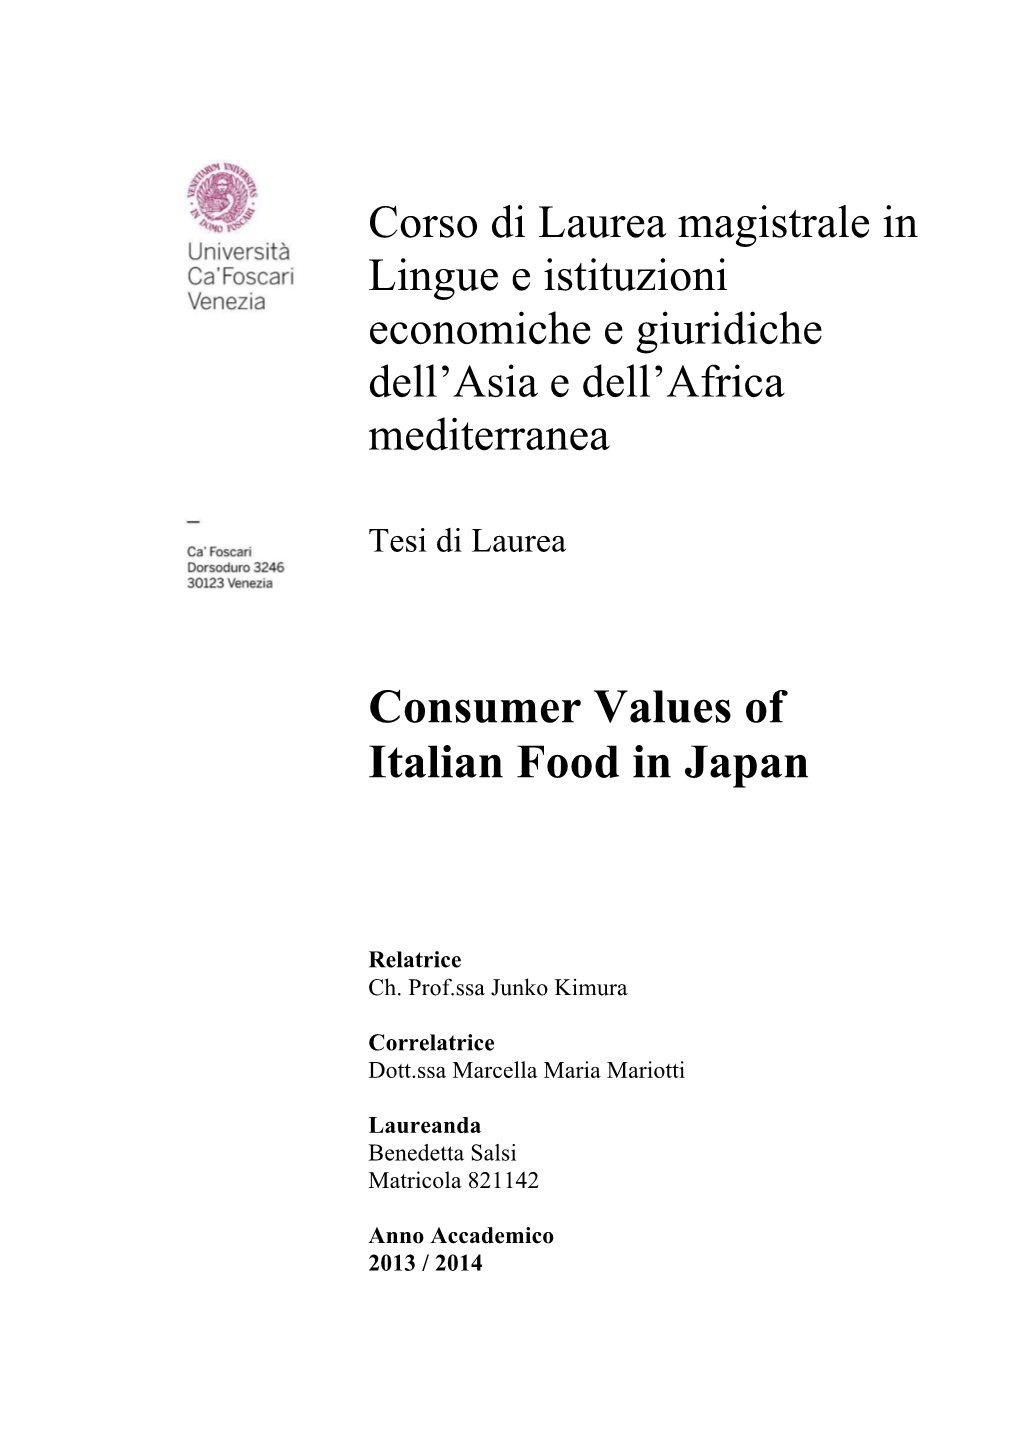 Consumer Values of Italian Food in Japan